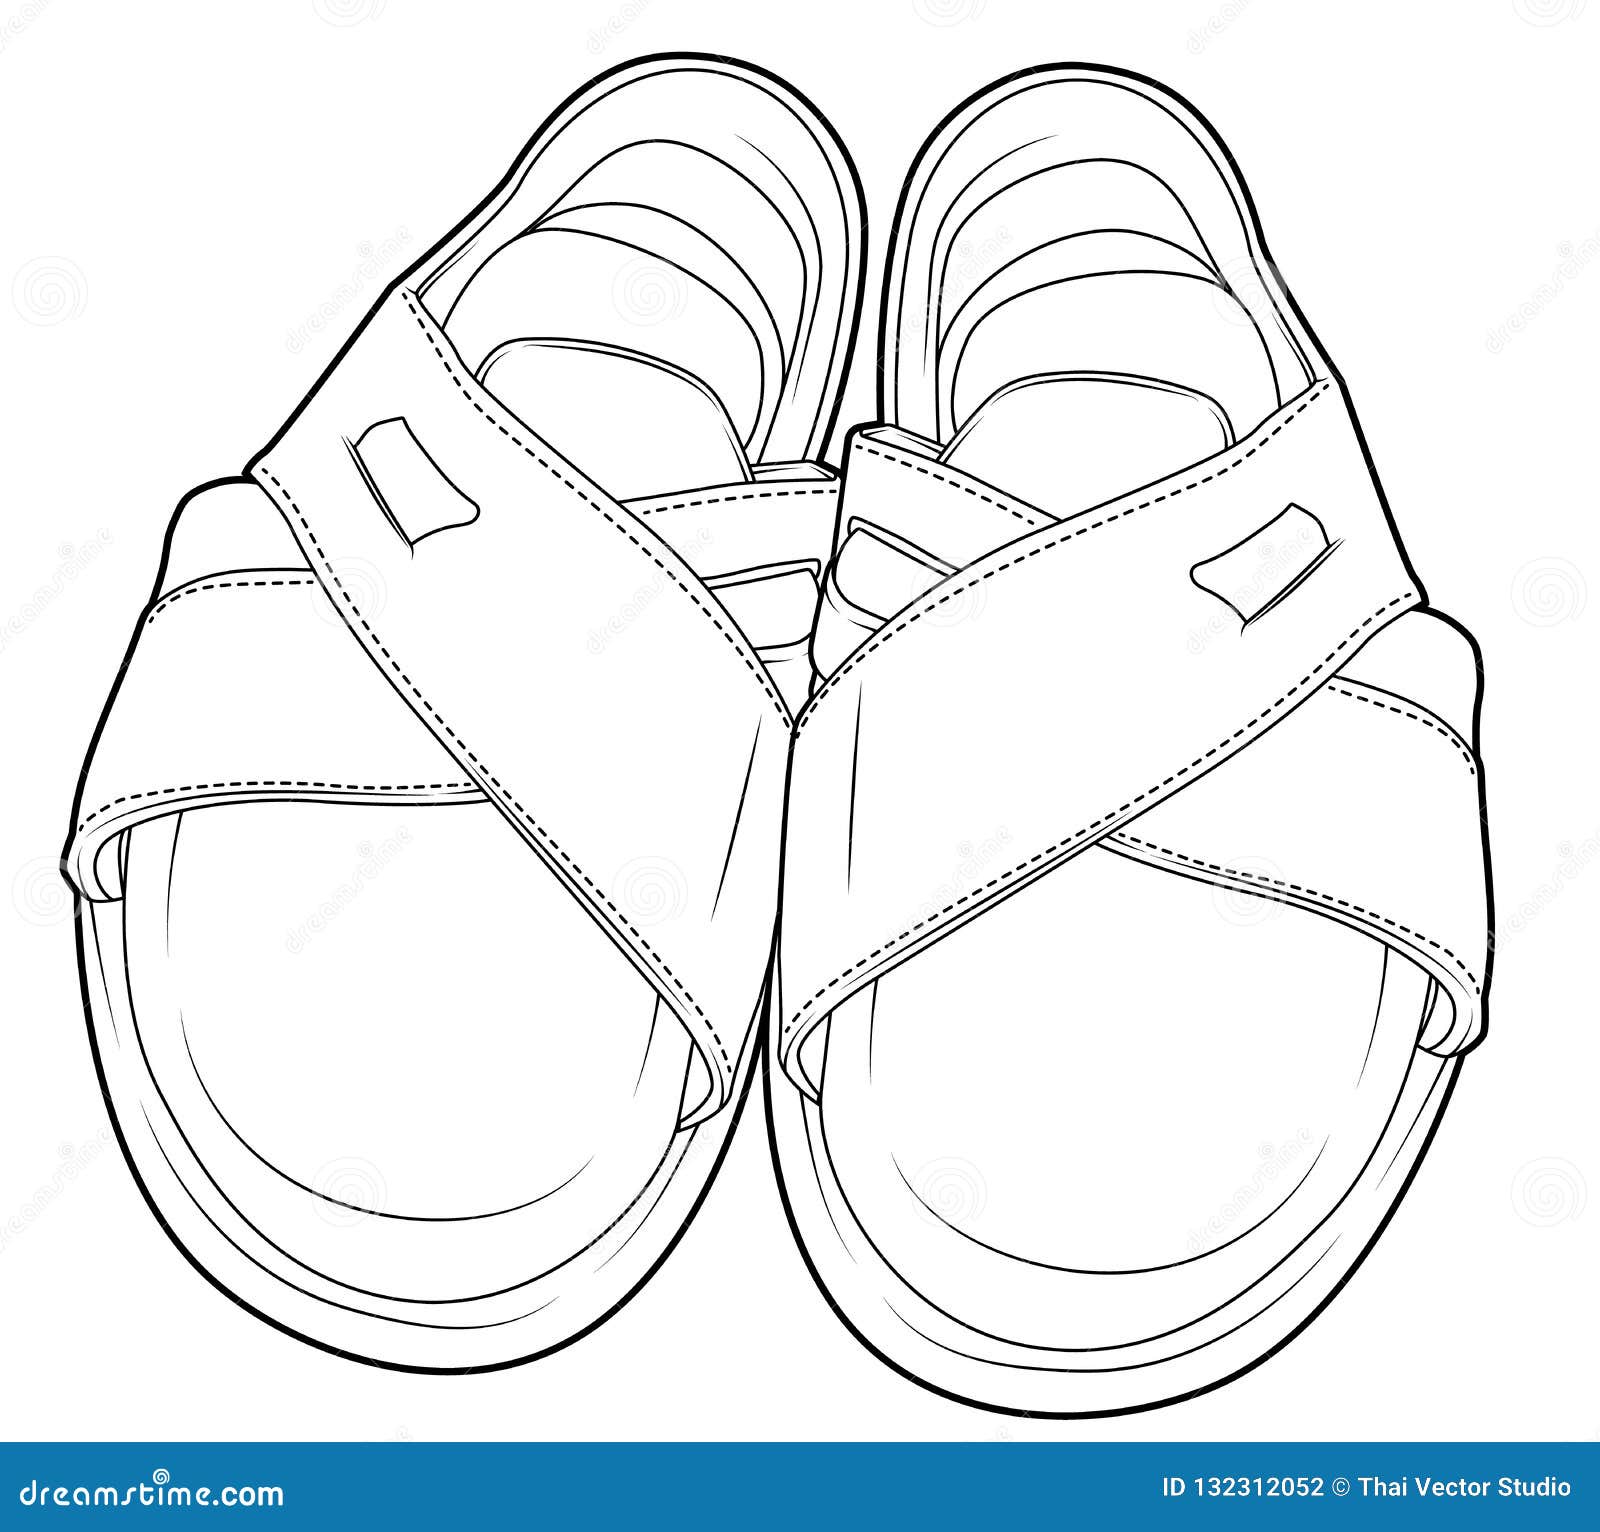 Sandal Leather Shoes Line Draw Stock Illustration - Illustration of ...